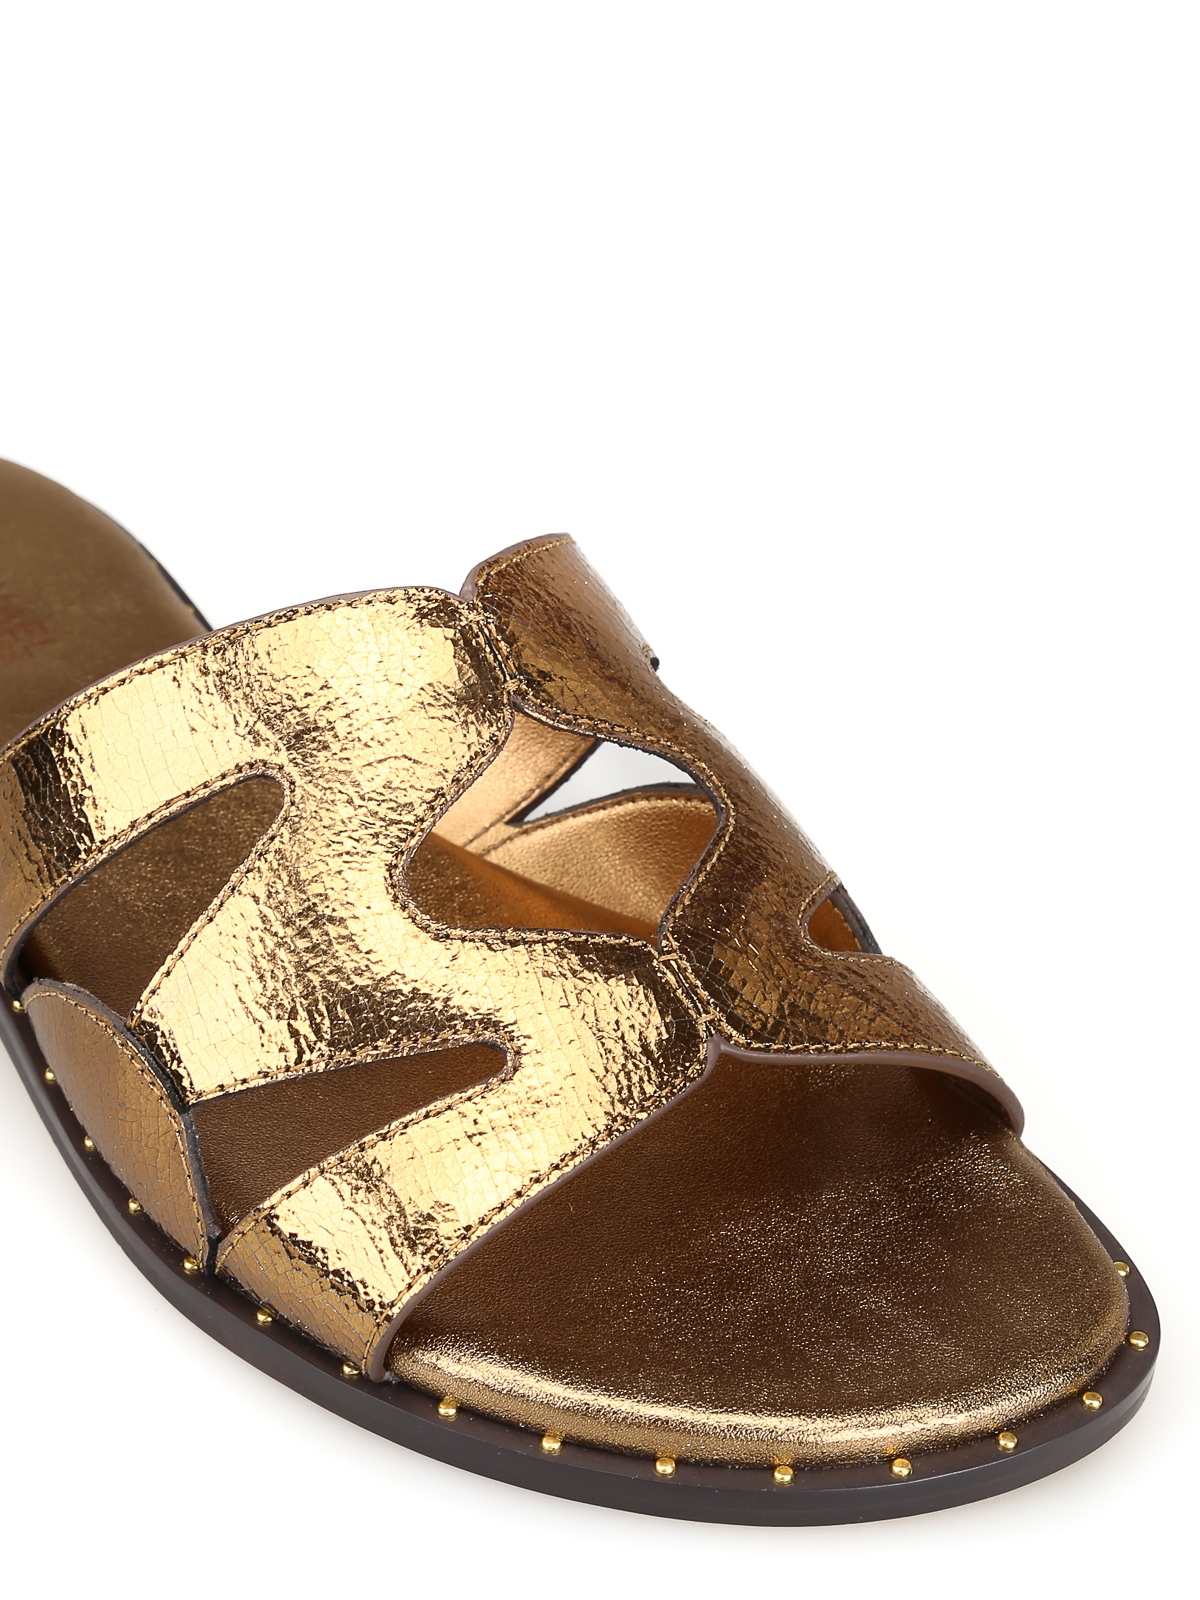 michael kors slide sandals gold